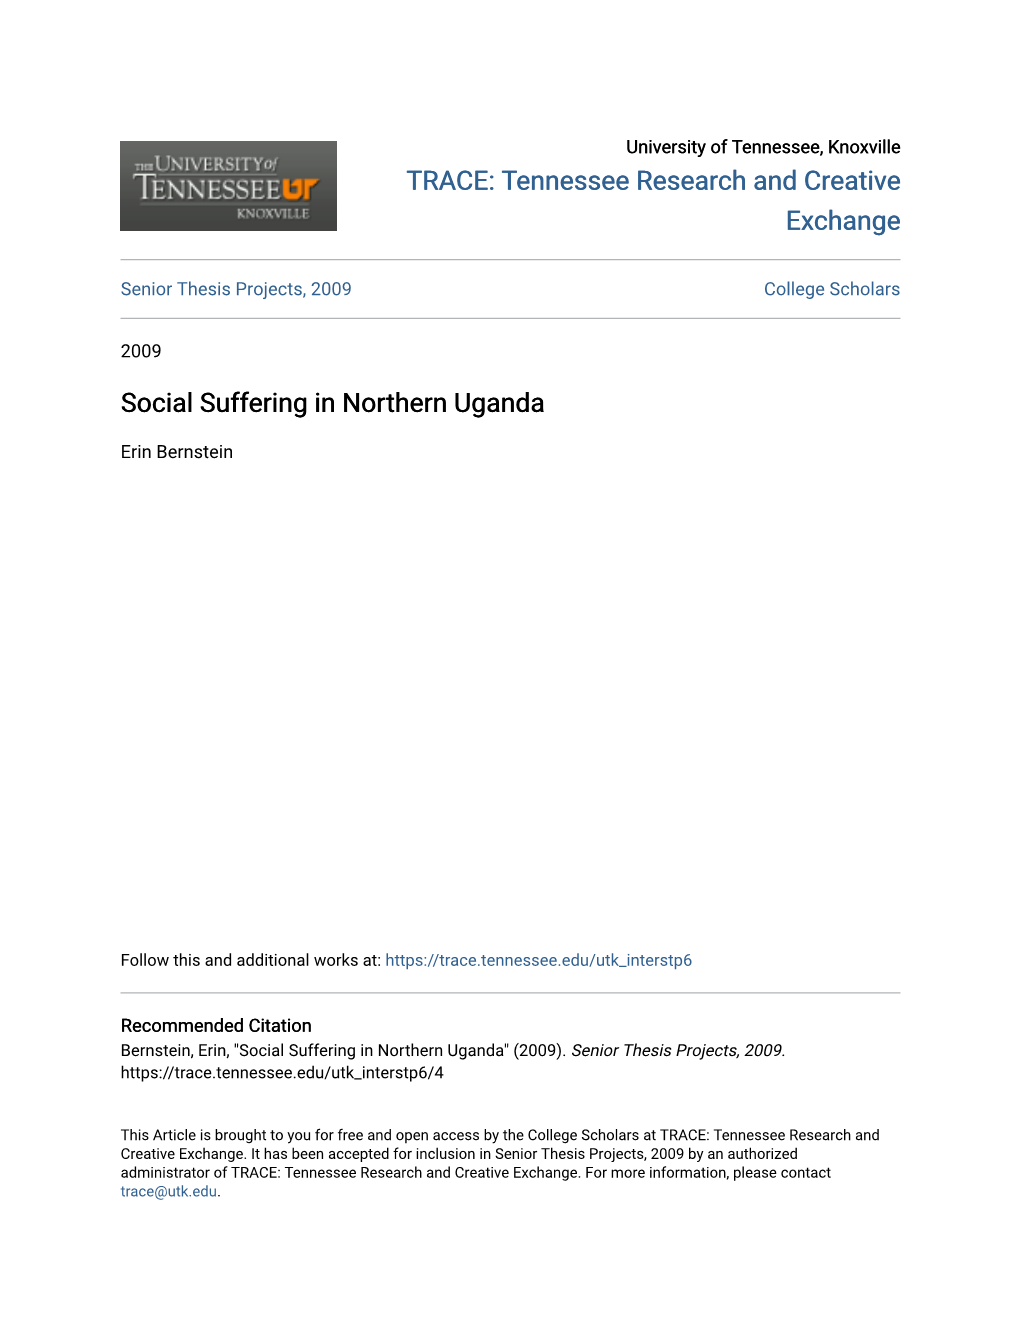 Social Suffering in Northern Uganda